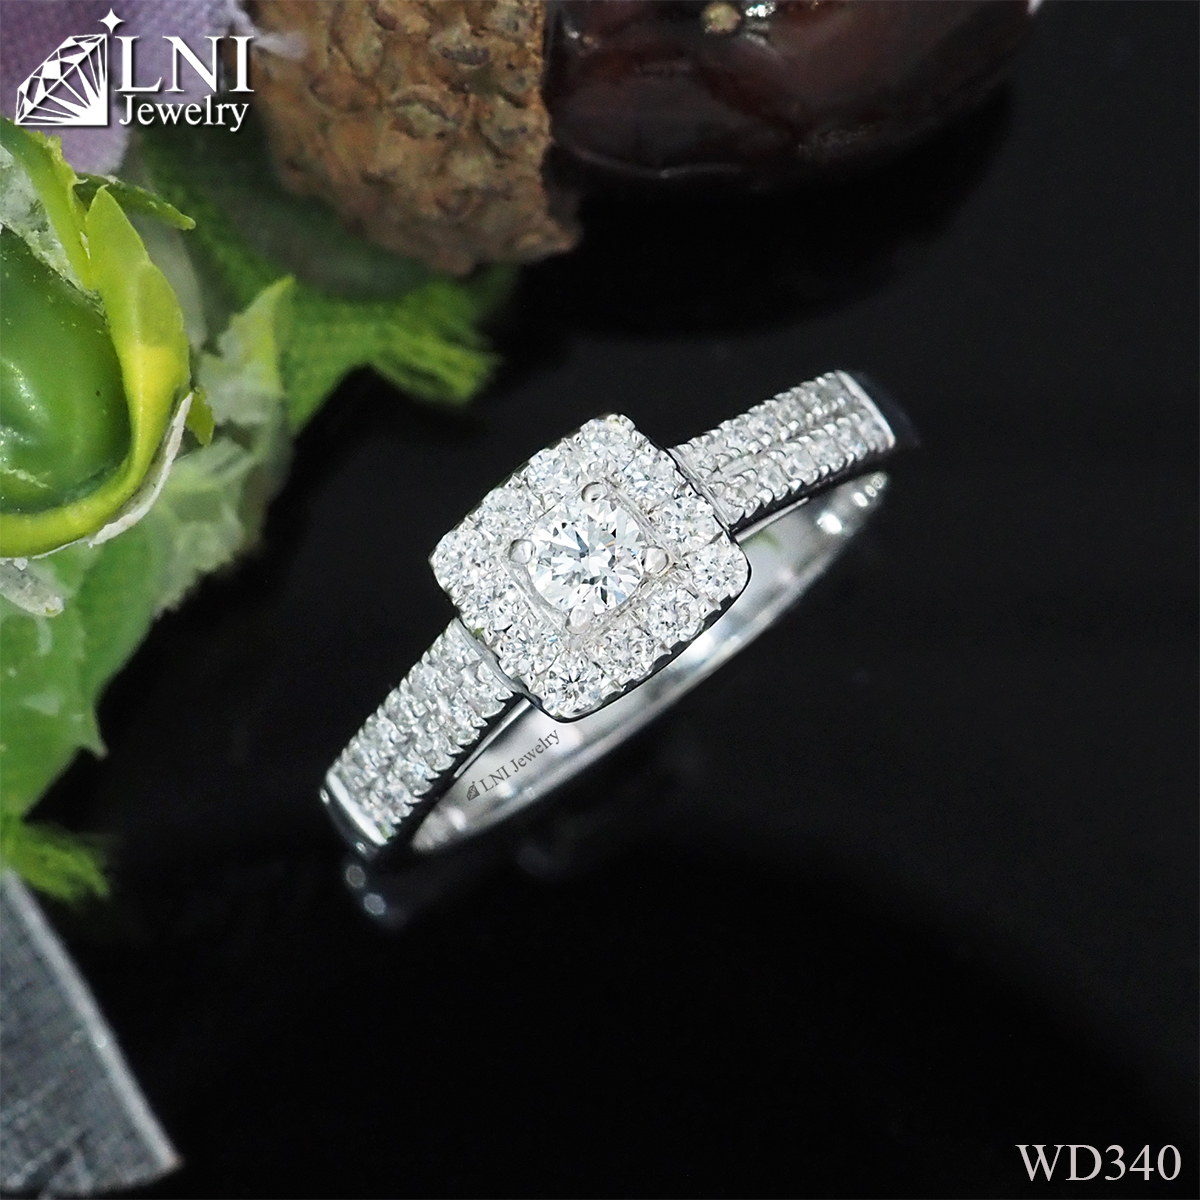 WD340 Halo Diamond Ring